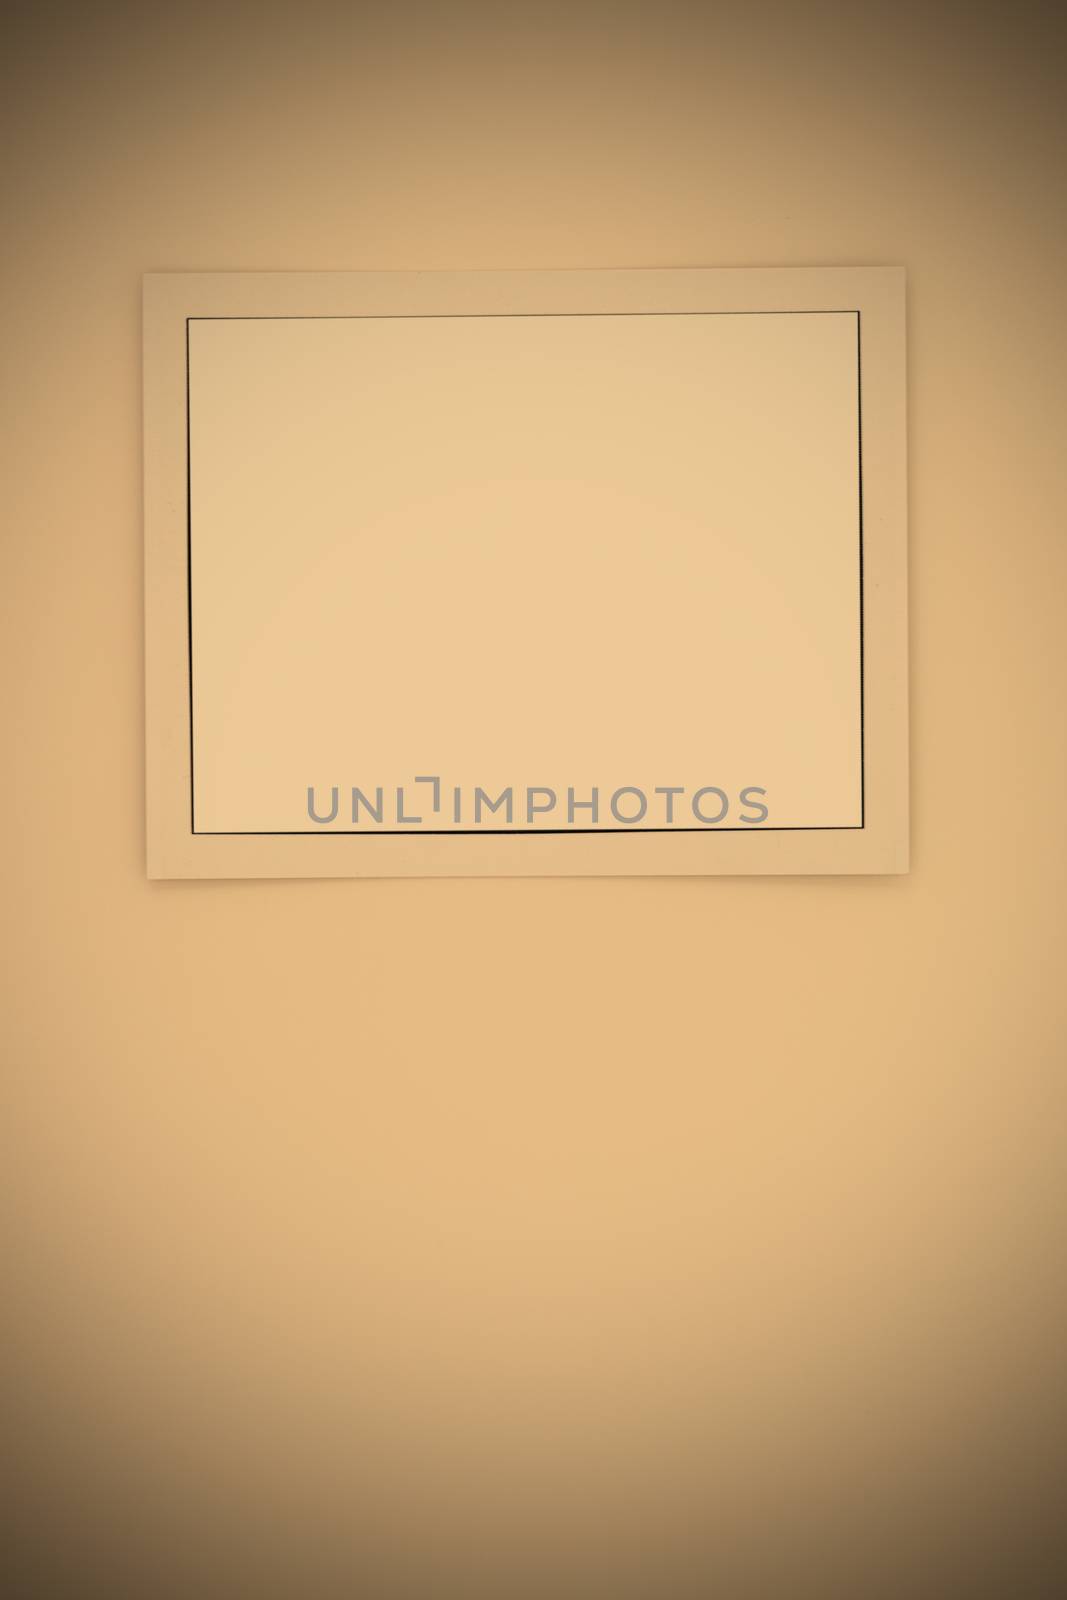 vintage blank frame on a white background, instagram image style